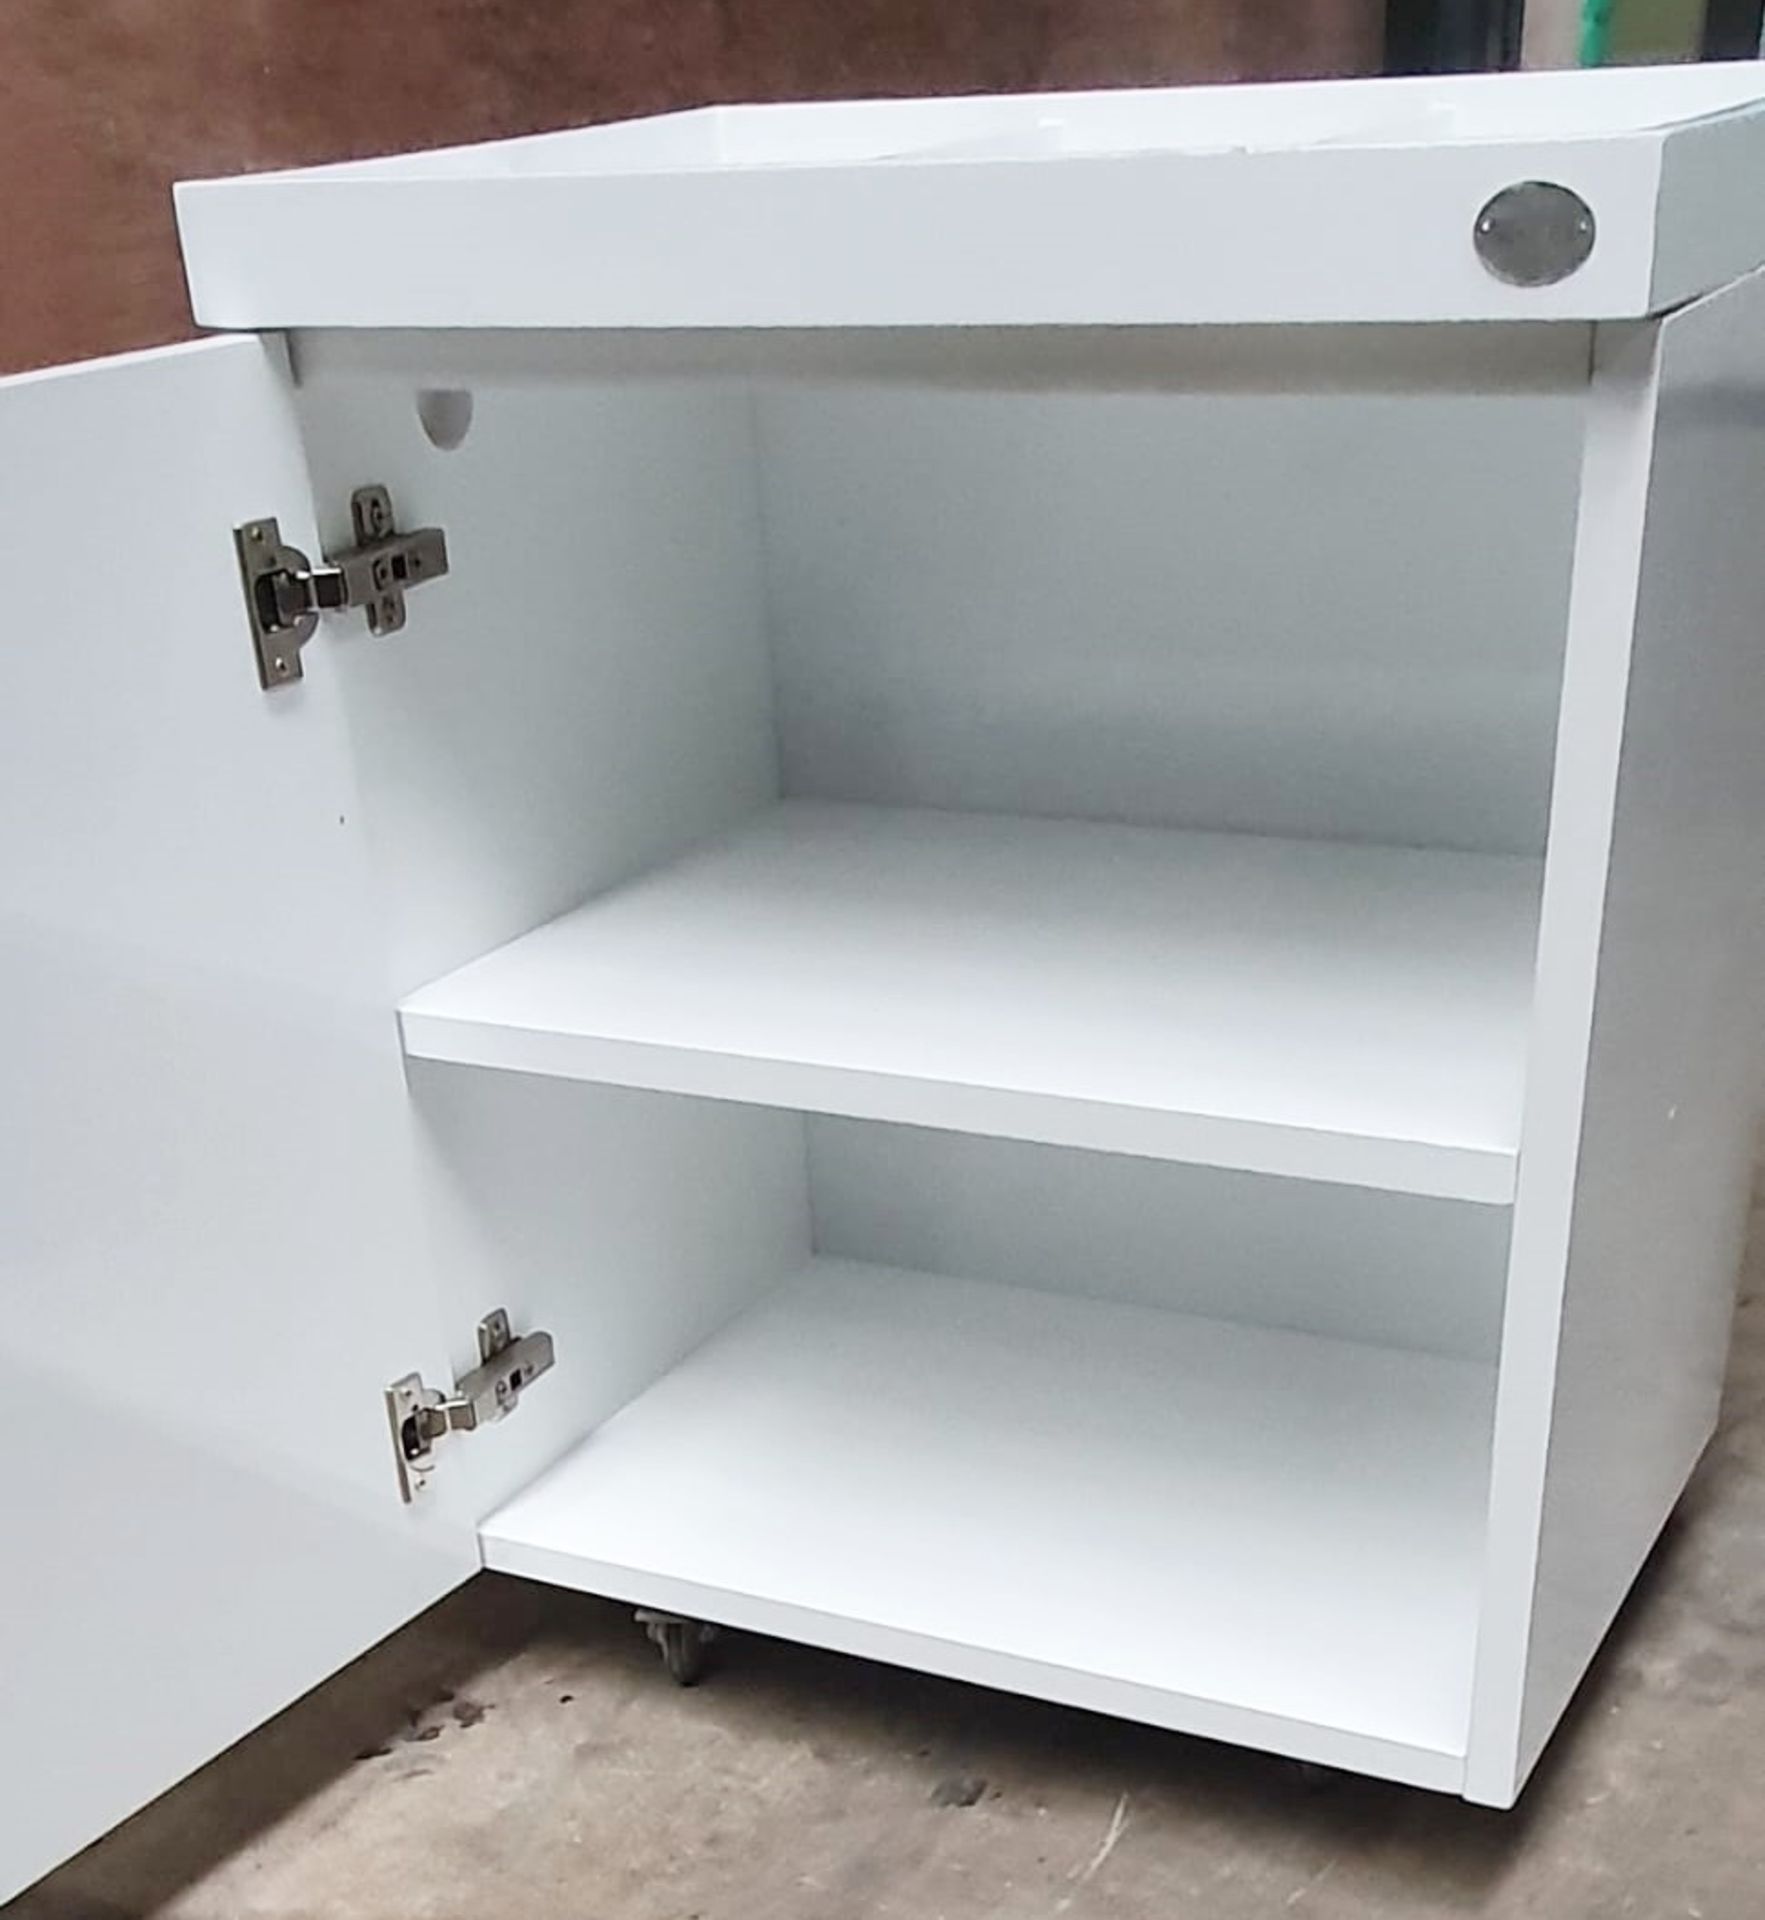 1 x GODI High-end Freestanding Mirrored 1-Door Bathroom Unit, In White - Unused Boxed Stock - Image 3 of 6